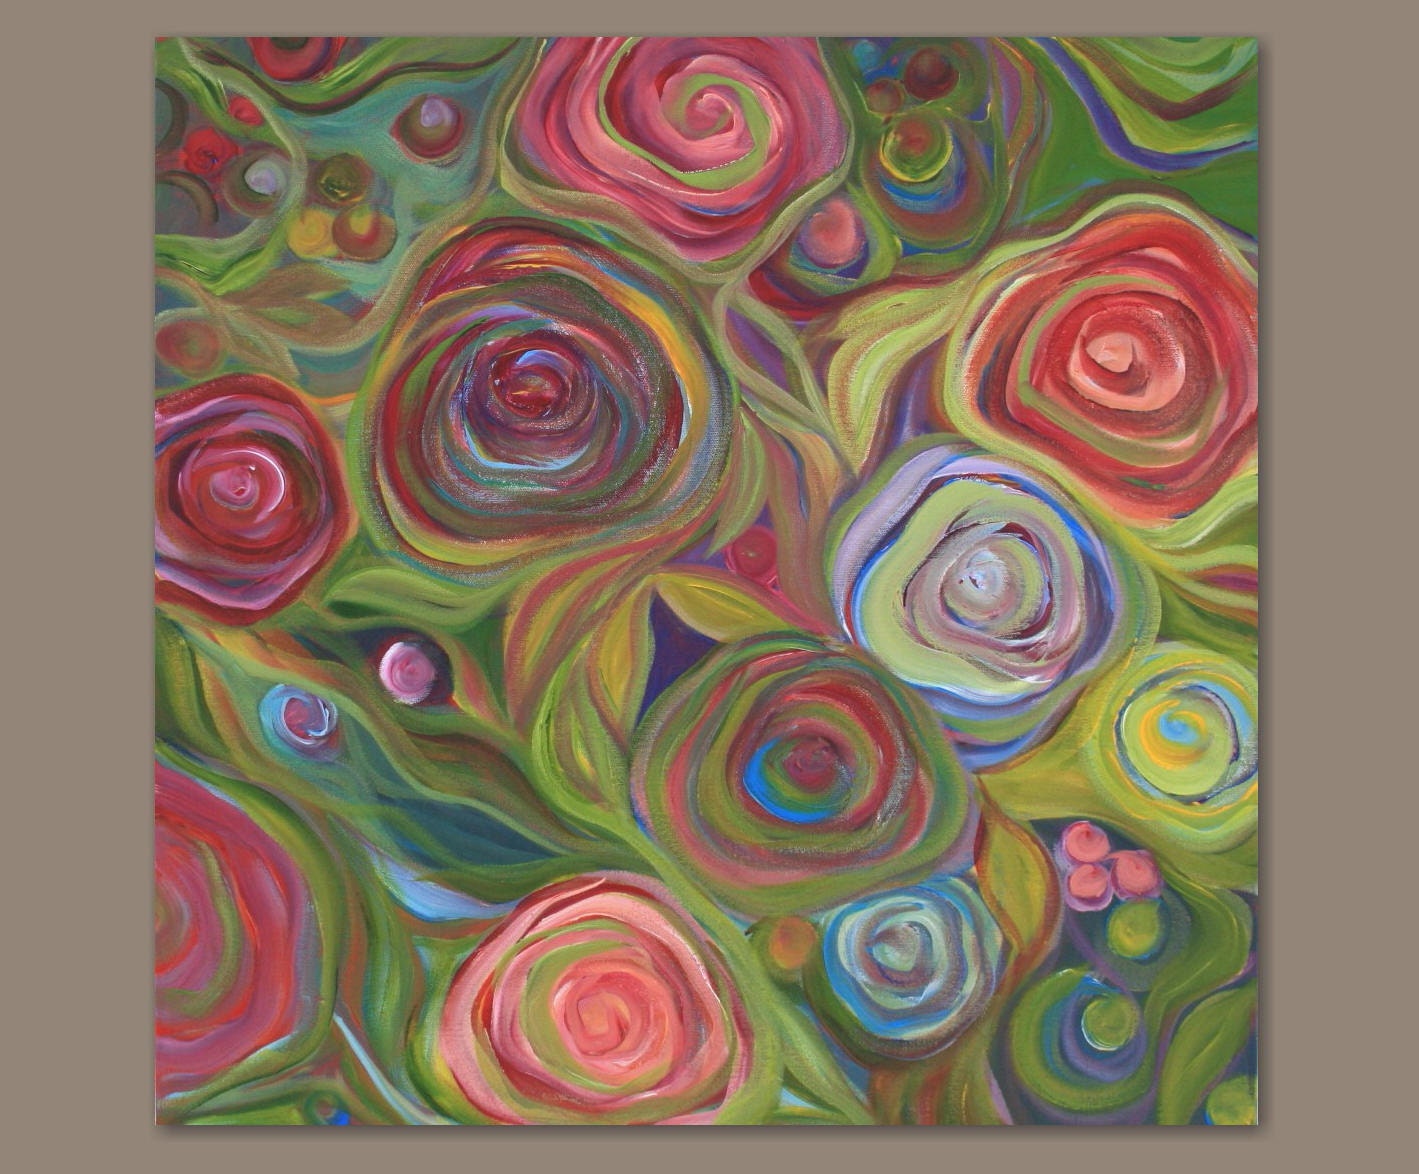 Abstract Rose Garden Painting Rose Garden 24x24 Original